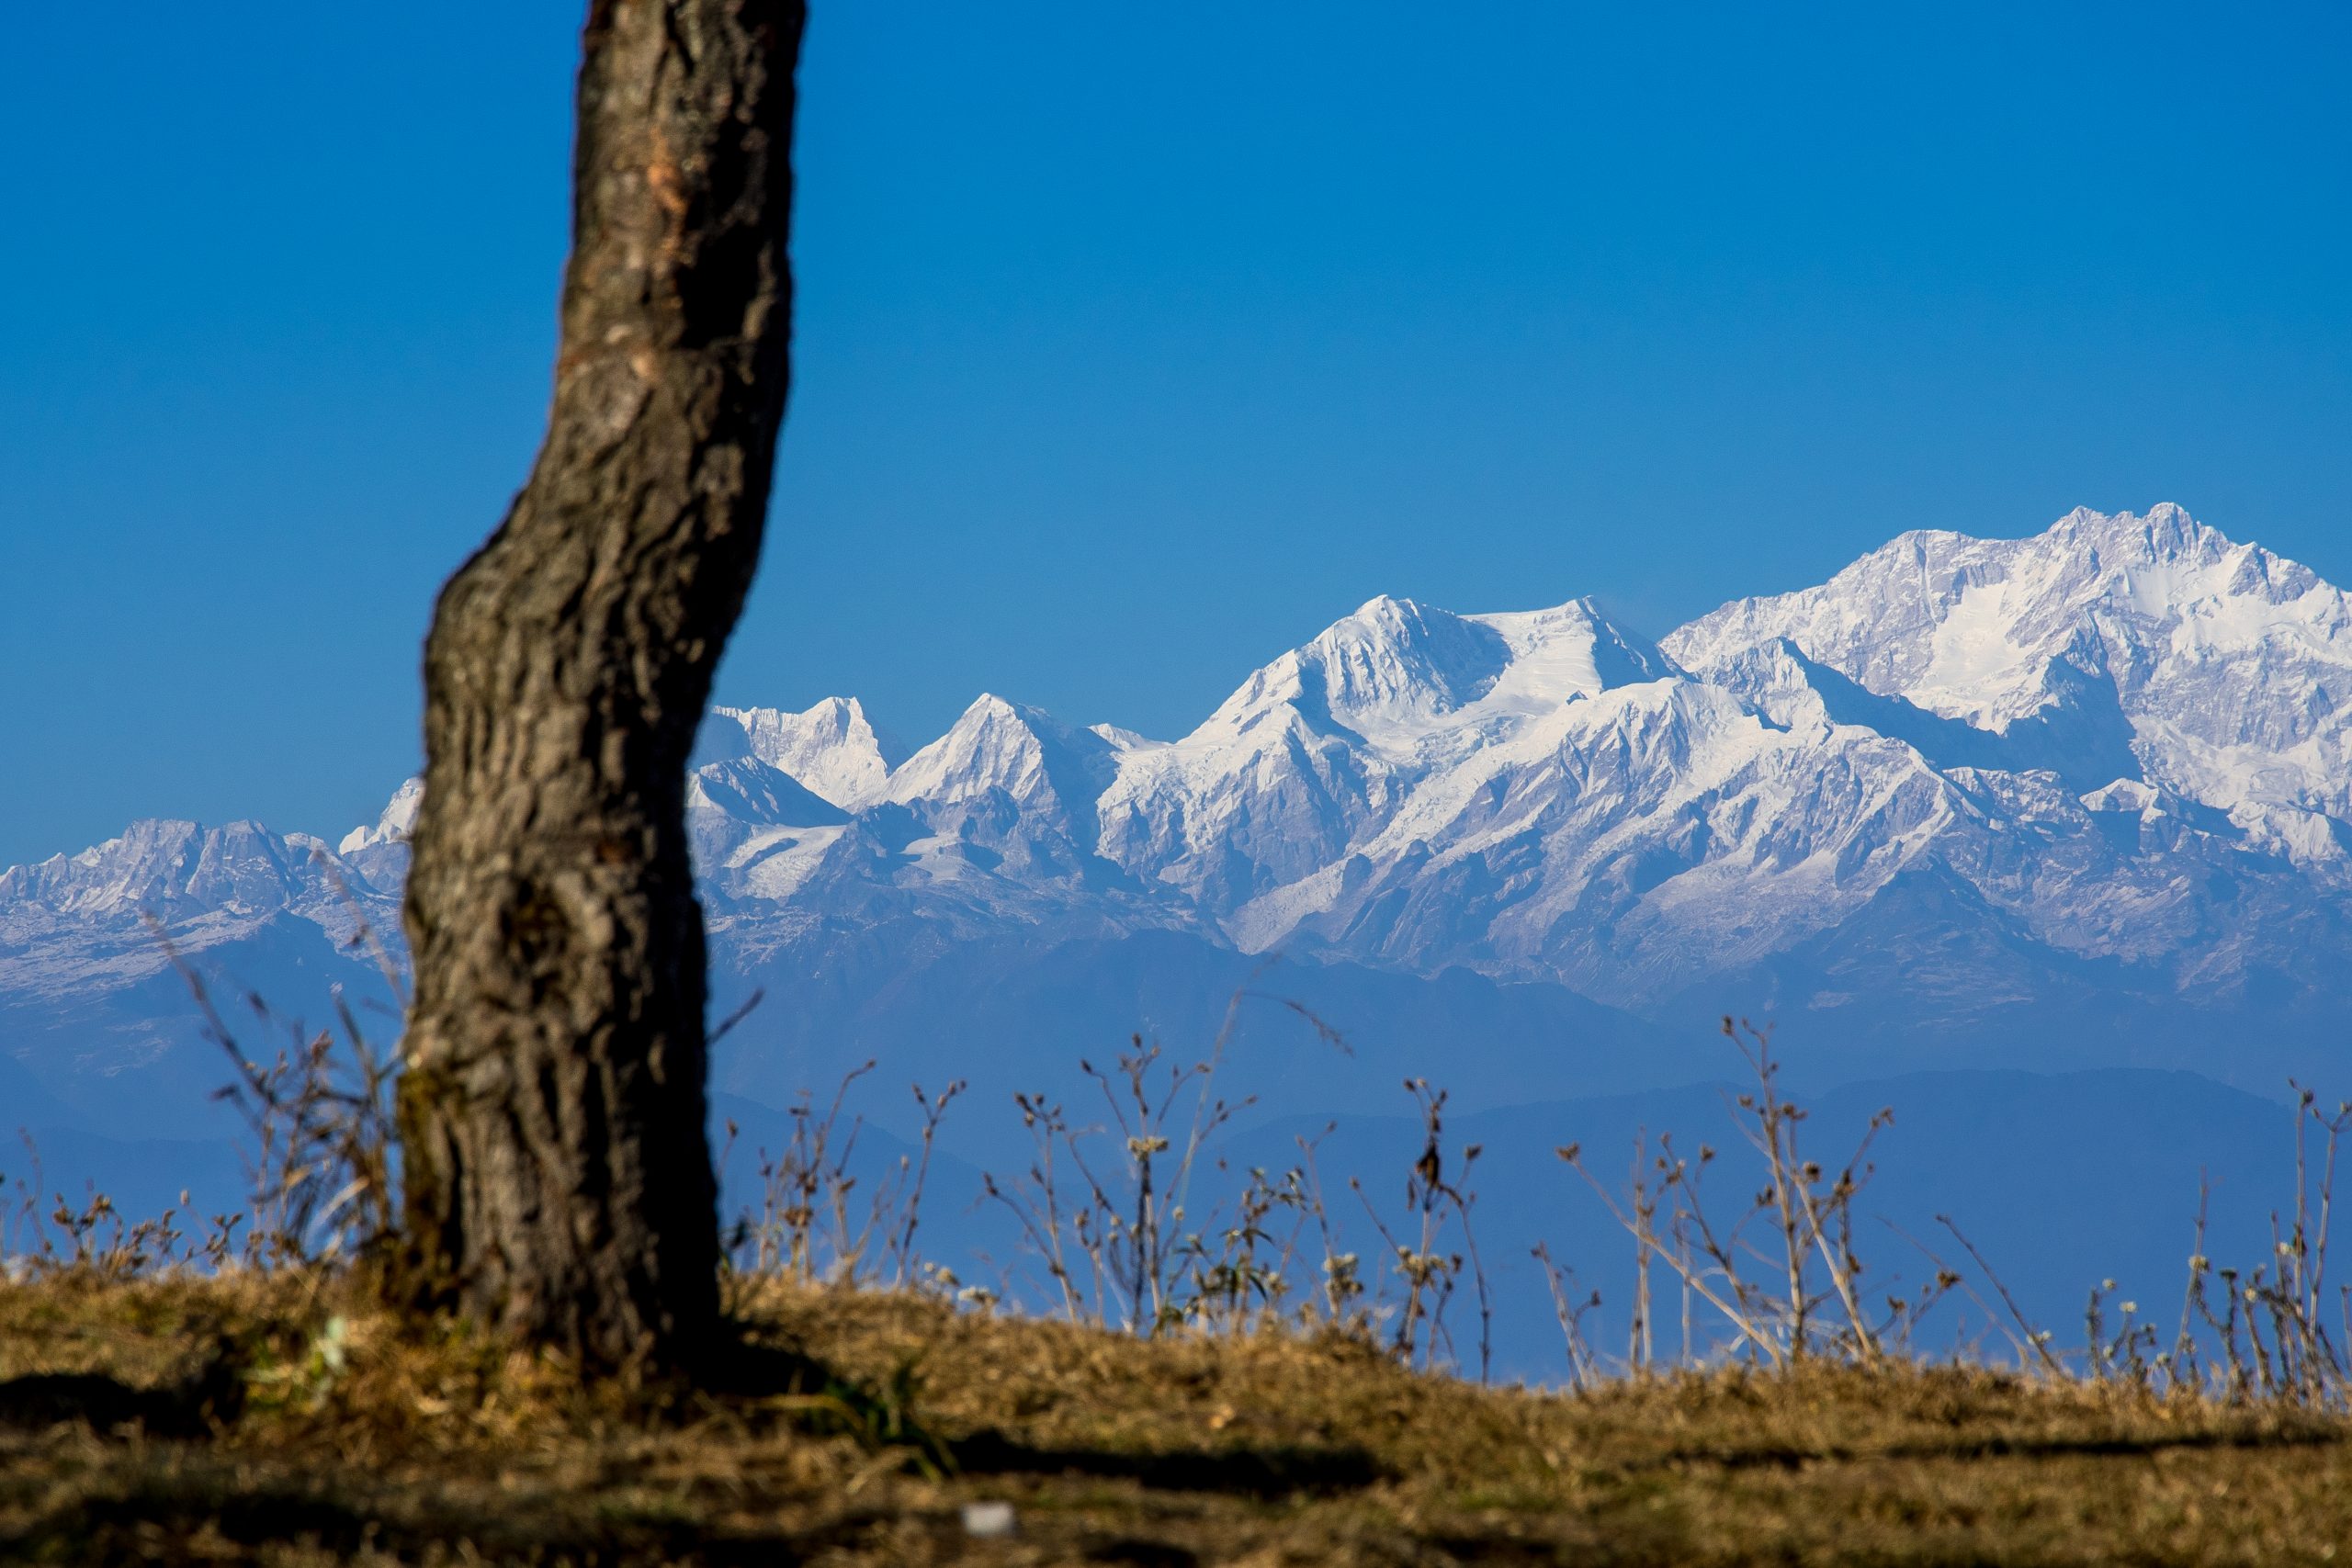 Mt. Kanchenjunga